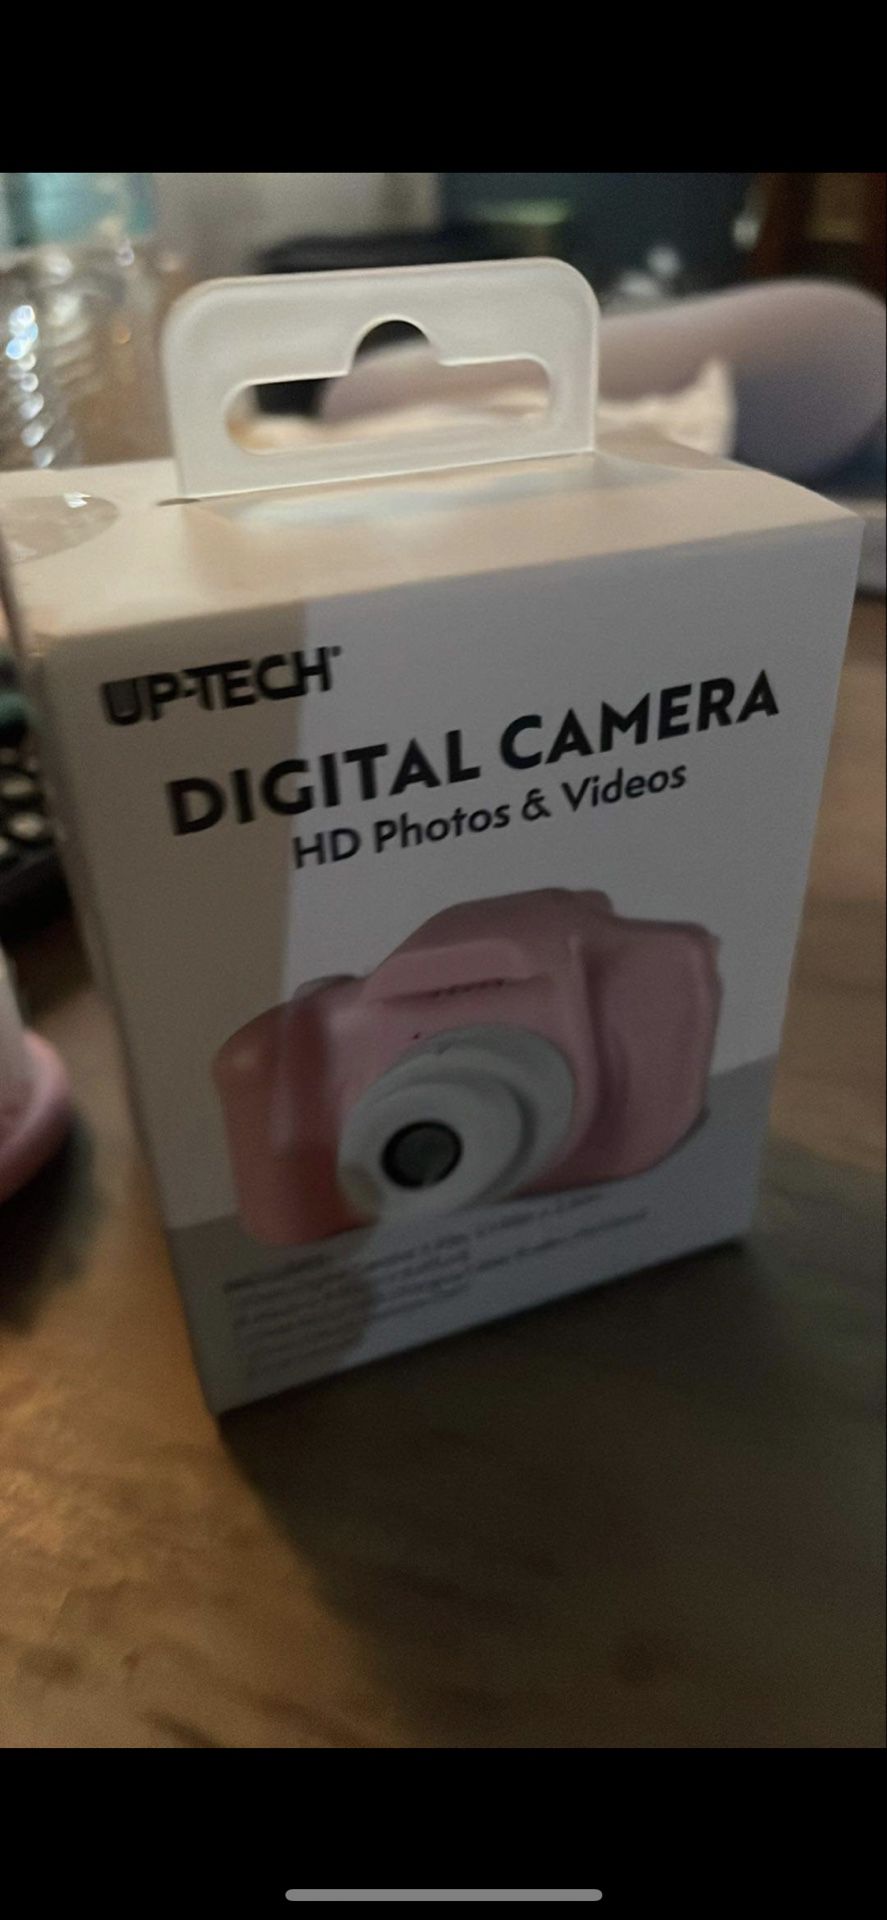 Digital Cameras 